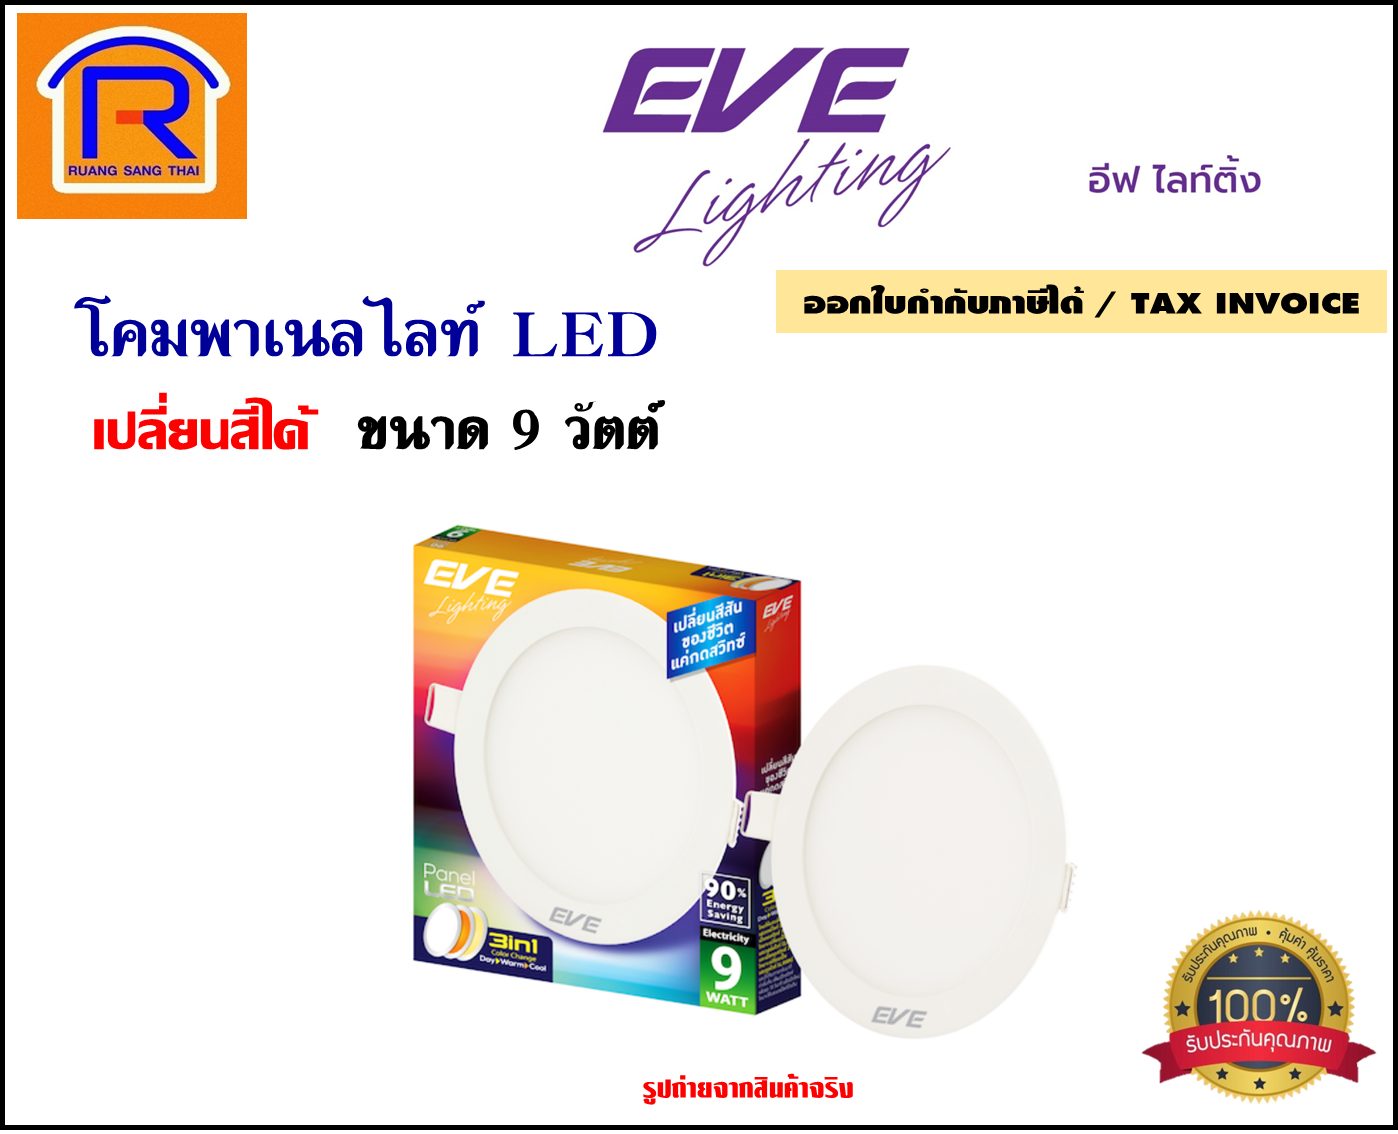 EVE lighting โคมพาเนลไลท์ LED 3in1 ขนาด 9 วัตต์ ดาวไลท์ (เปลี่ยนสีได้)